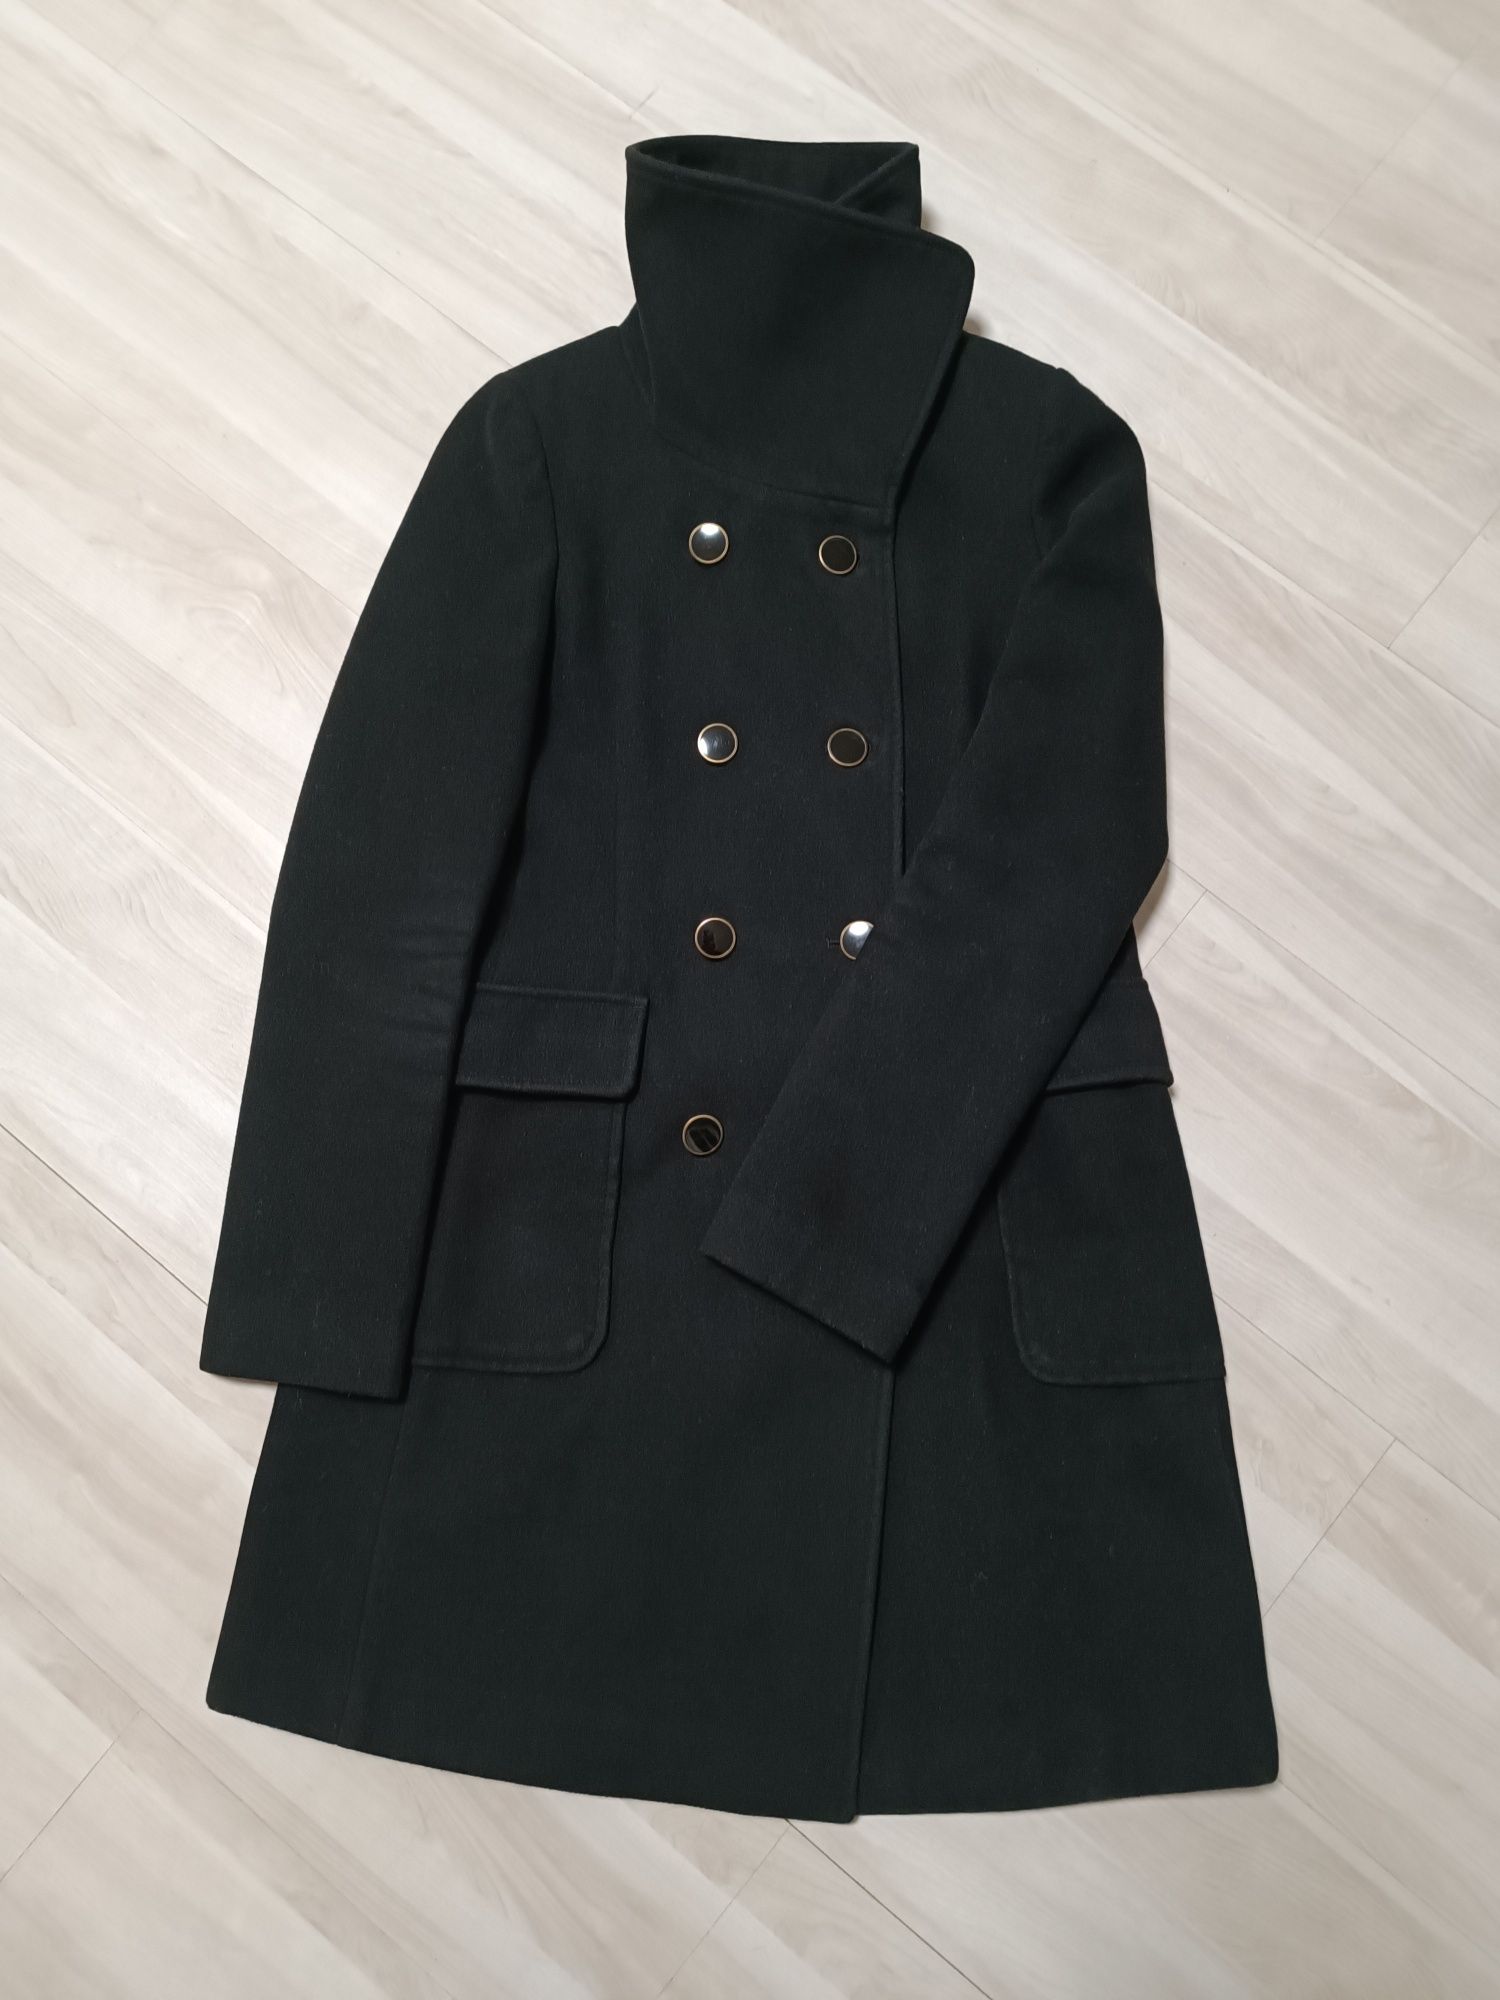 Пальто женское, размер М